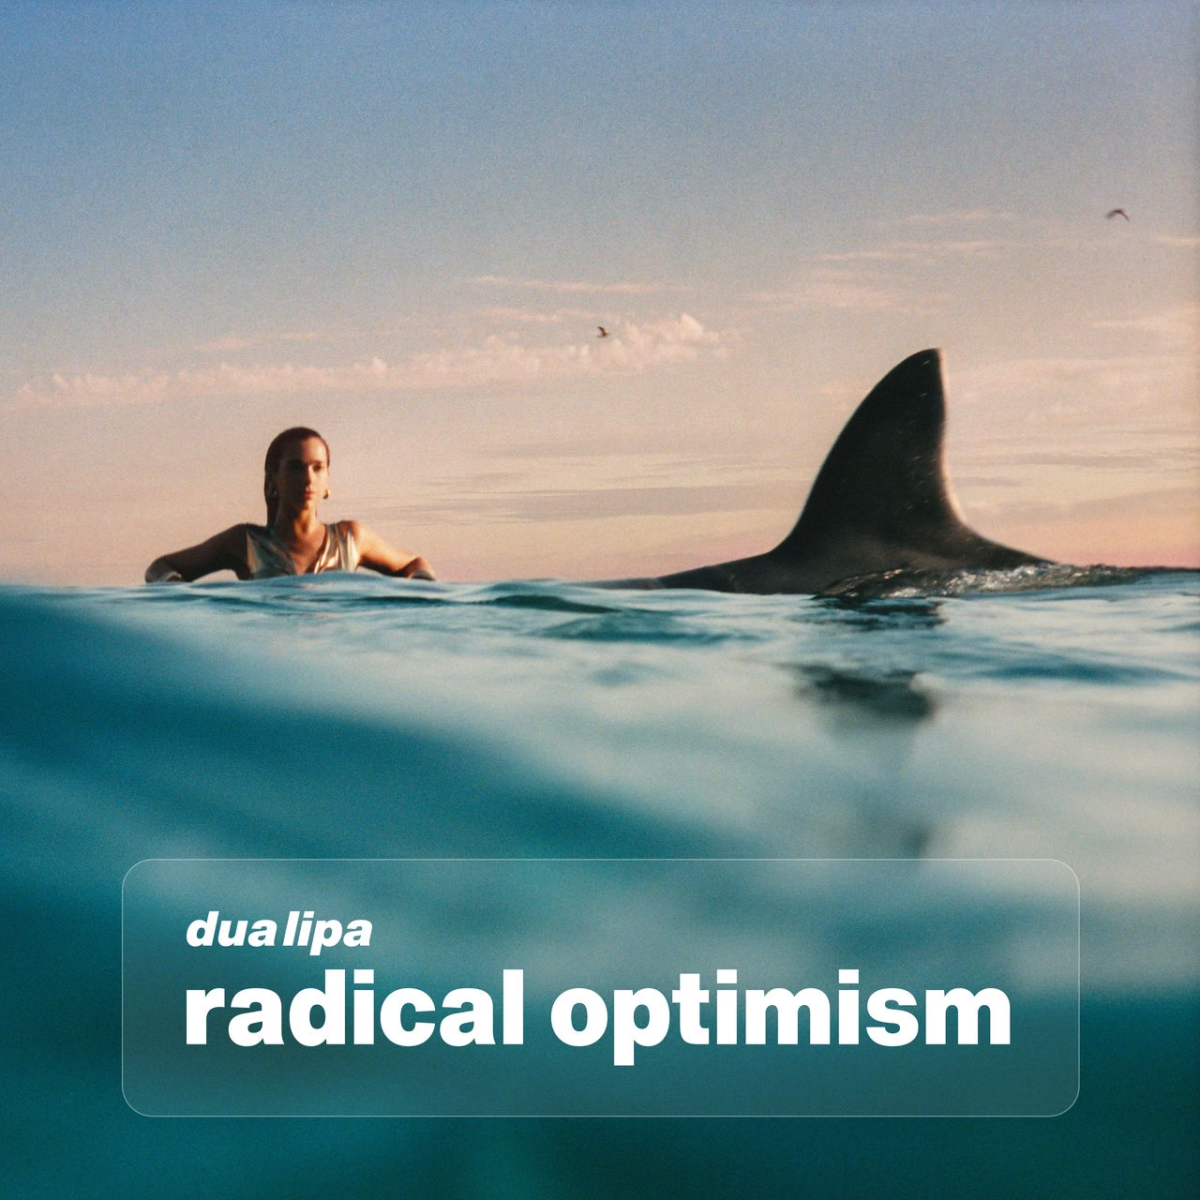 Dua Lipas new album, Radical Optimism, has received mixed reviews.